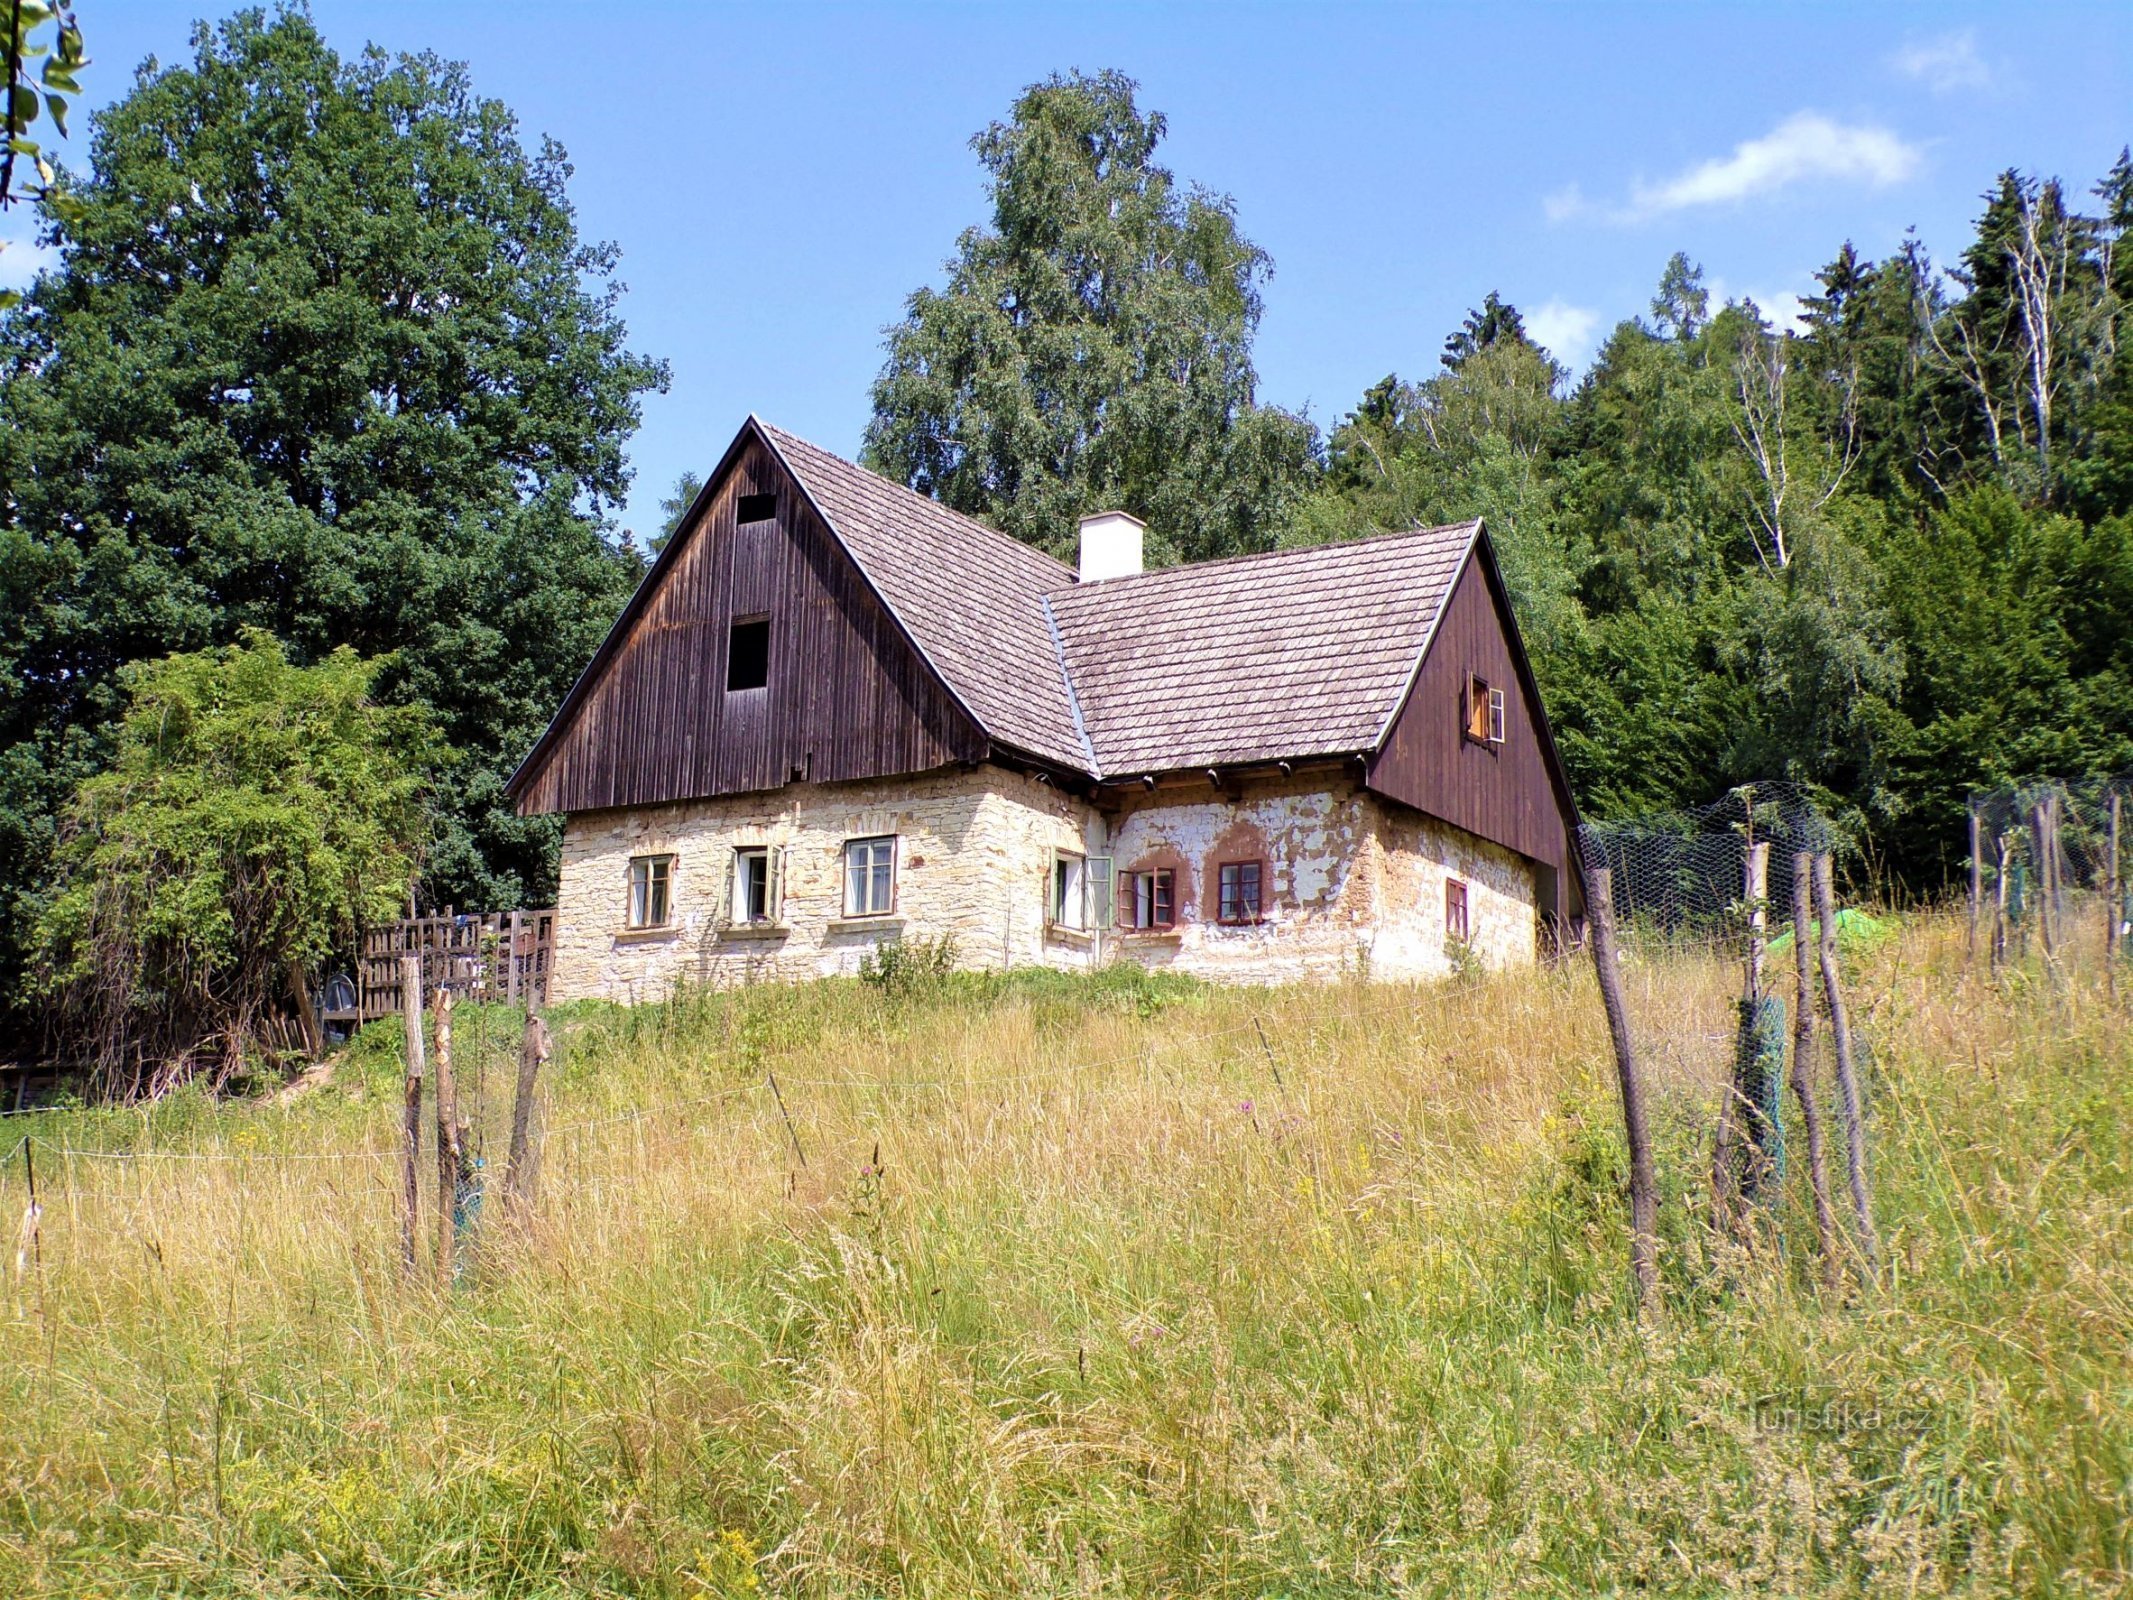 Hiša št. 501 v Bokoušu (Velika Bukovina, 13.7.2021. XNUMX. XNUMX)